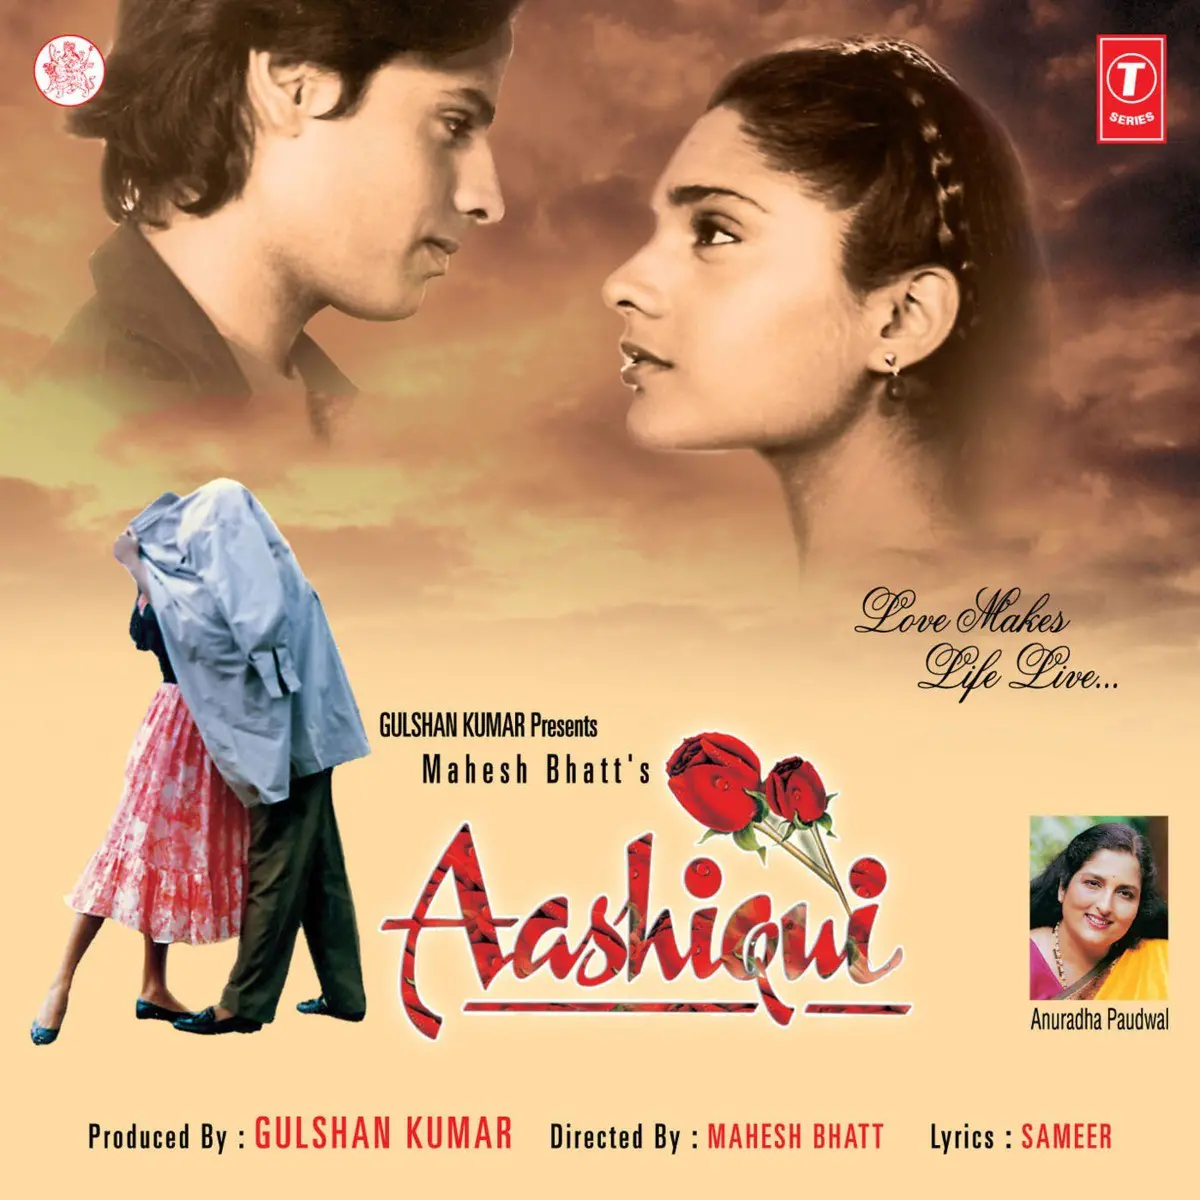 Aashiqui Songs Download Aashiqui Mp3 Songs Online Free On Gaana Com